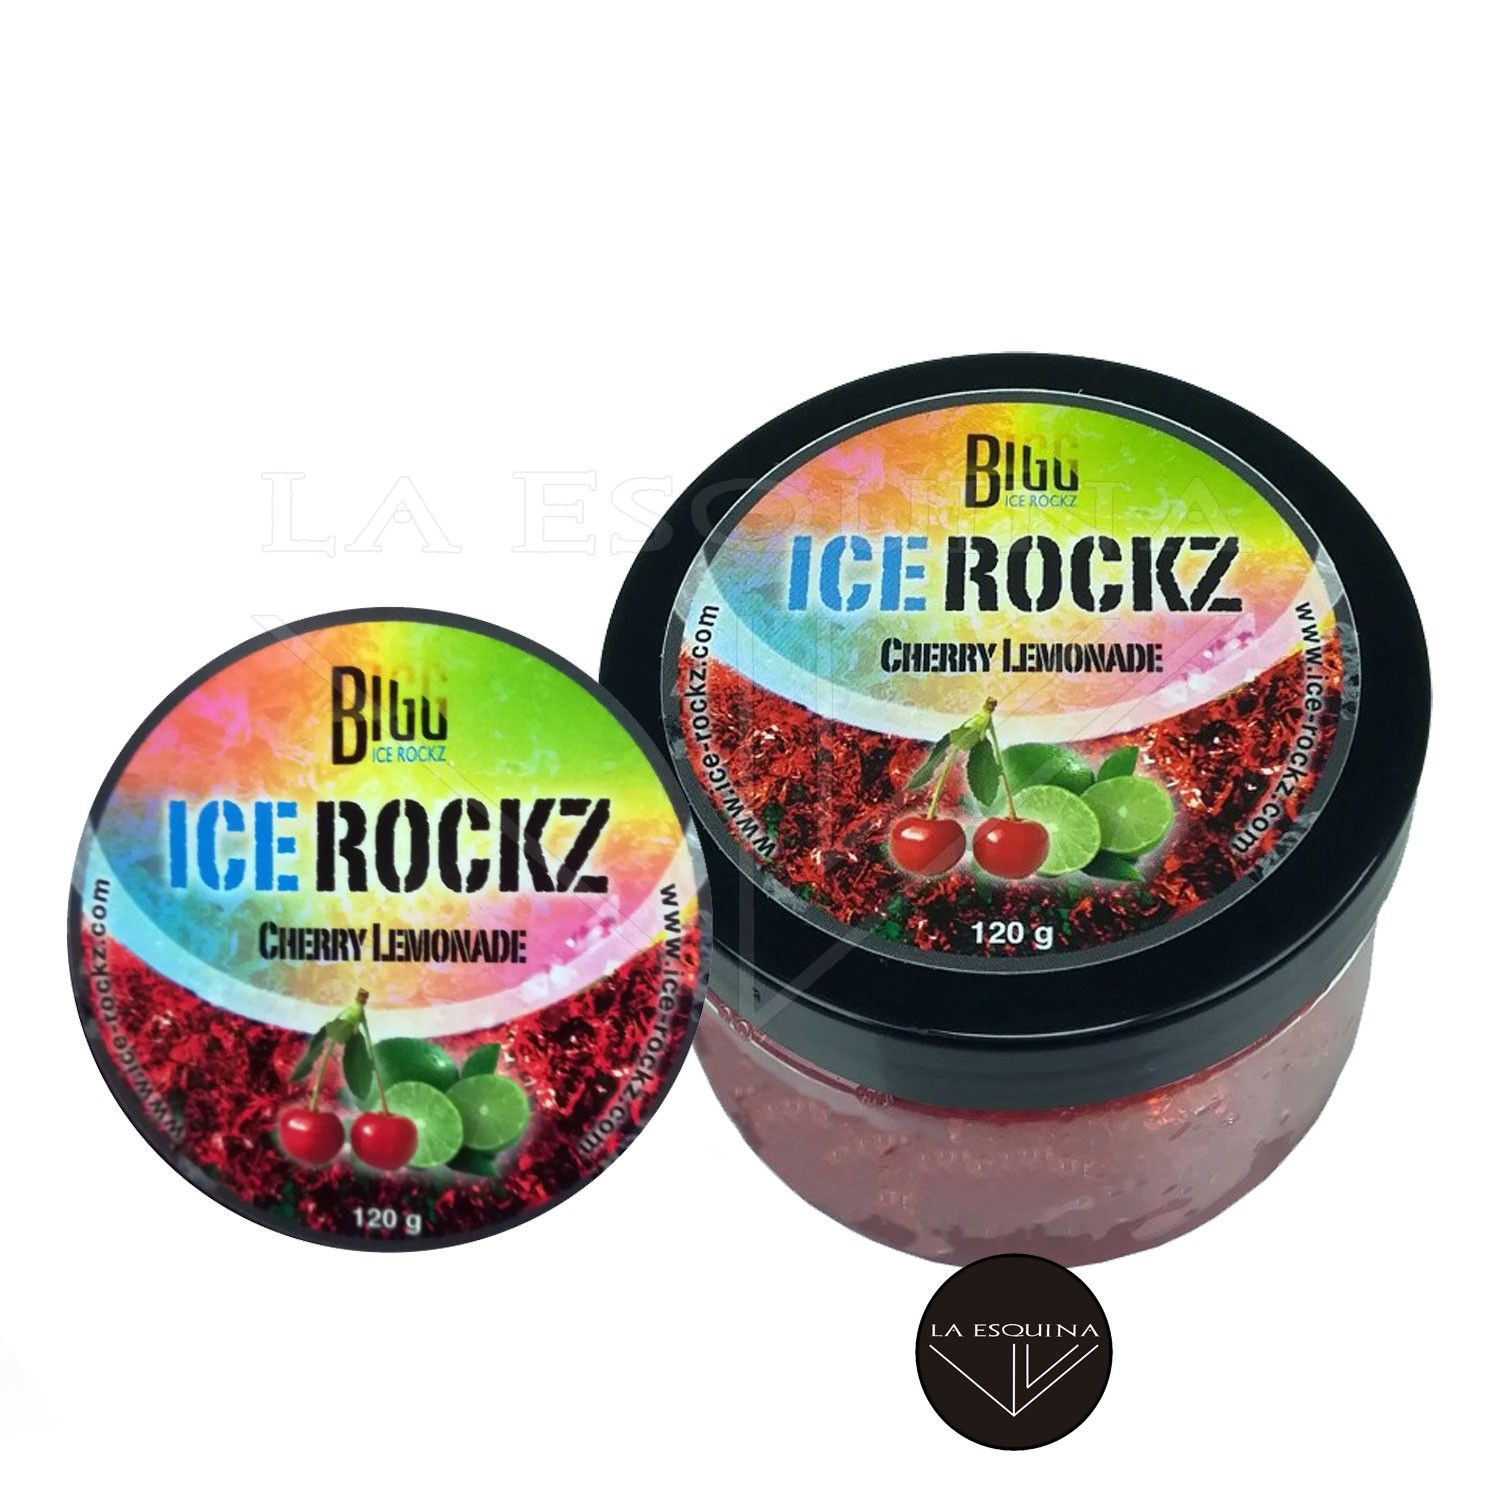 Gel Rock de Cachimba BIGG ICE ROCKZ – 120 g. – Cherry Lemonade